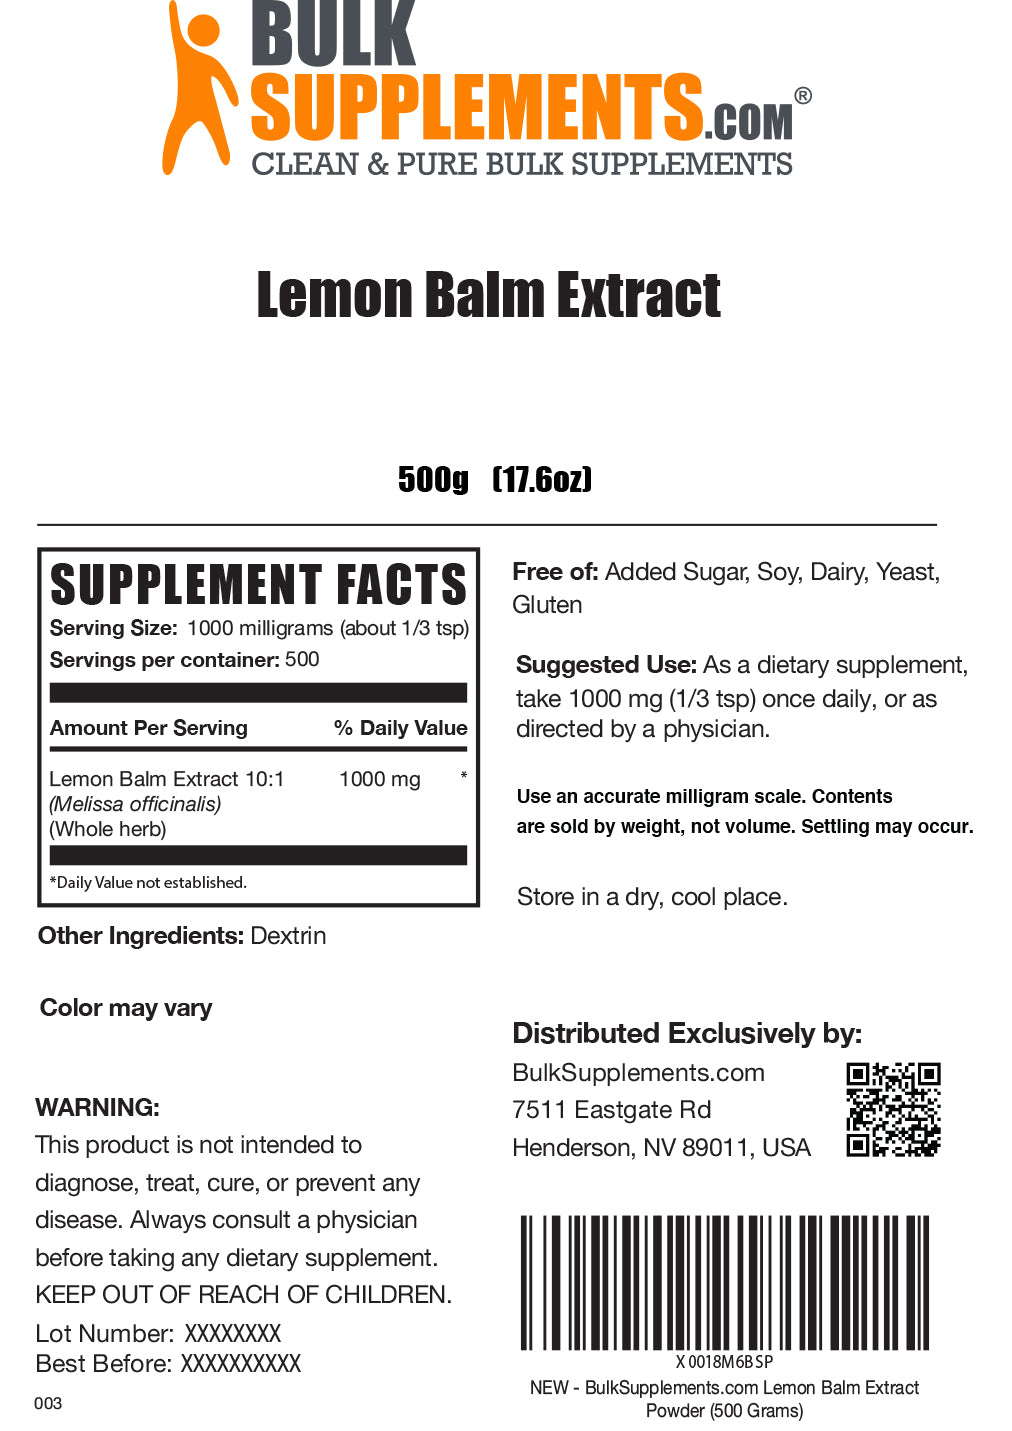 Lemon Balm Extract powder label 500g